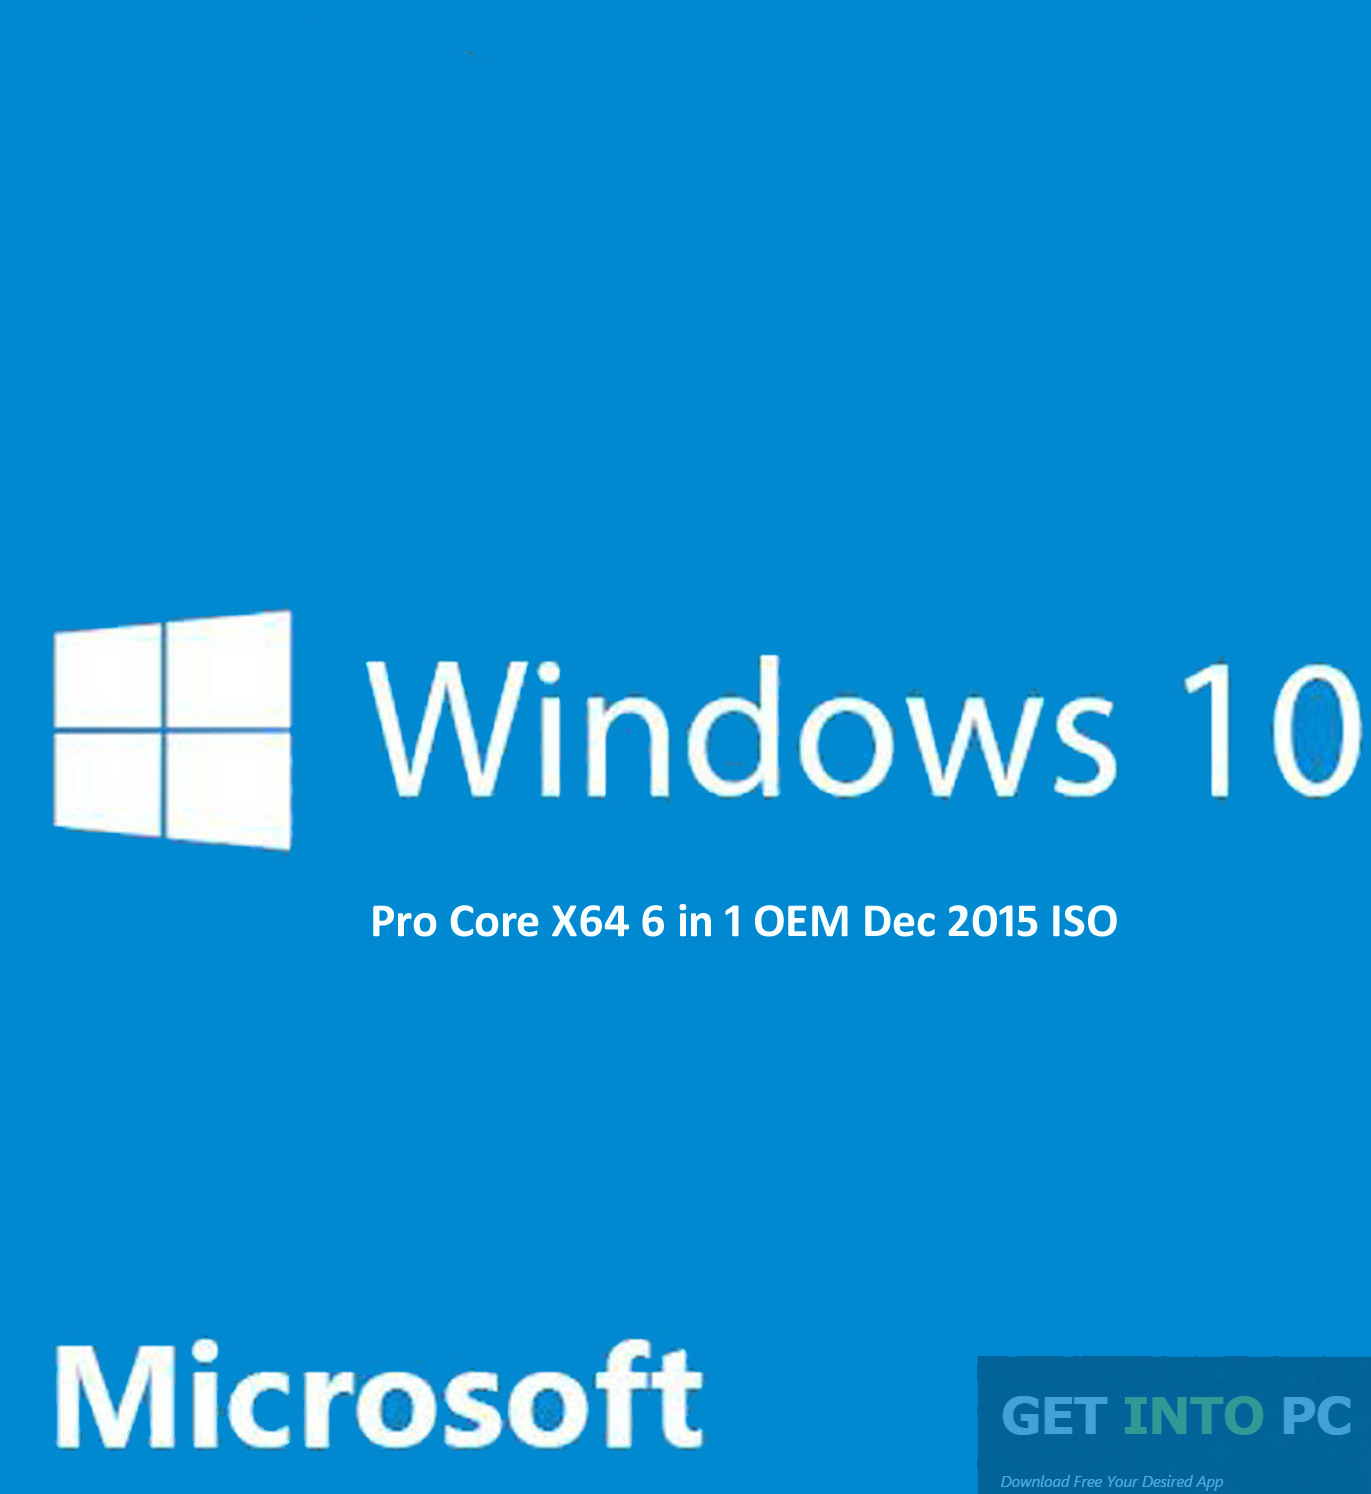 Windows 10 Pro Core X64 6 in 1 OEM Dec 2015 ISO Download